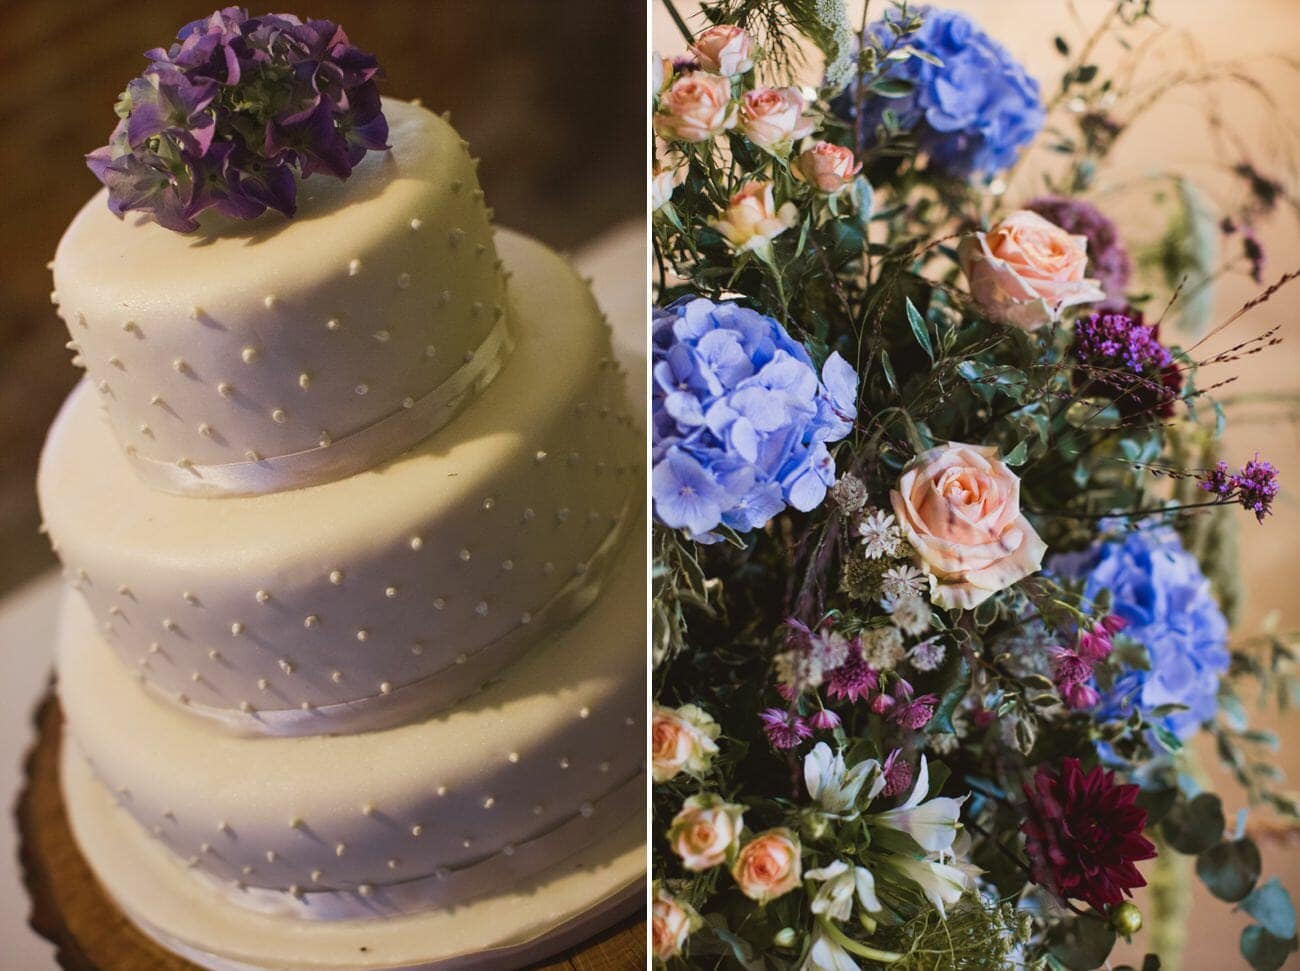 Hall Farm Wordwell Barn wedding cake and flowers